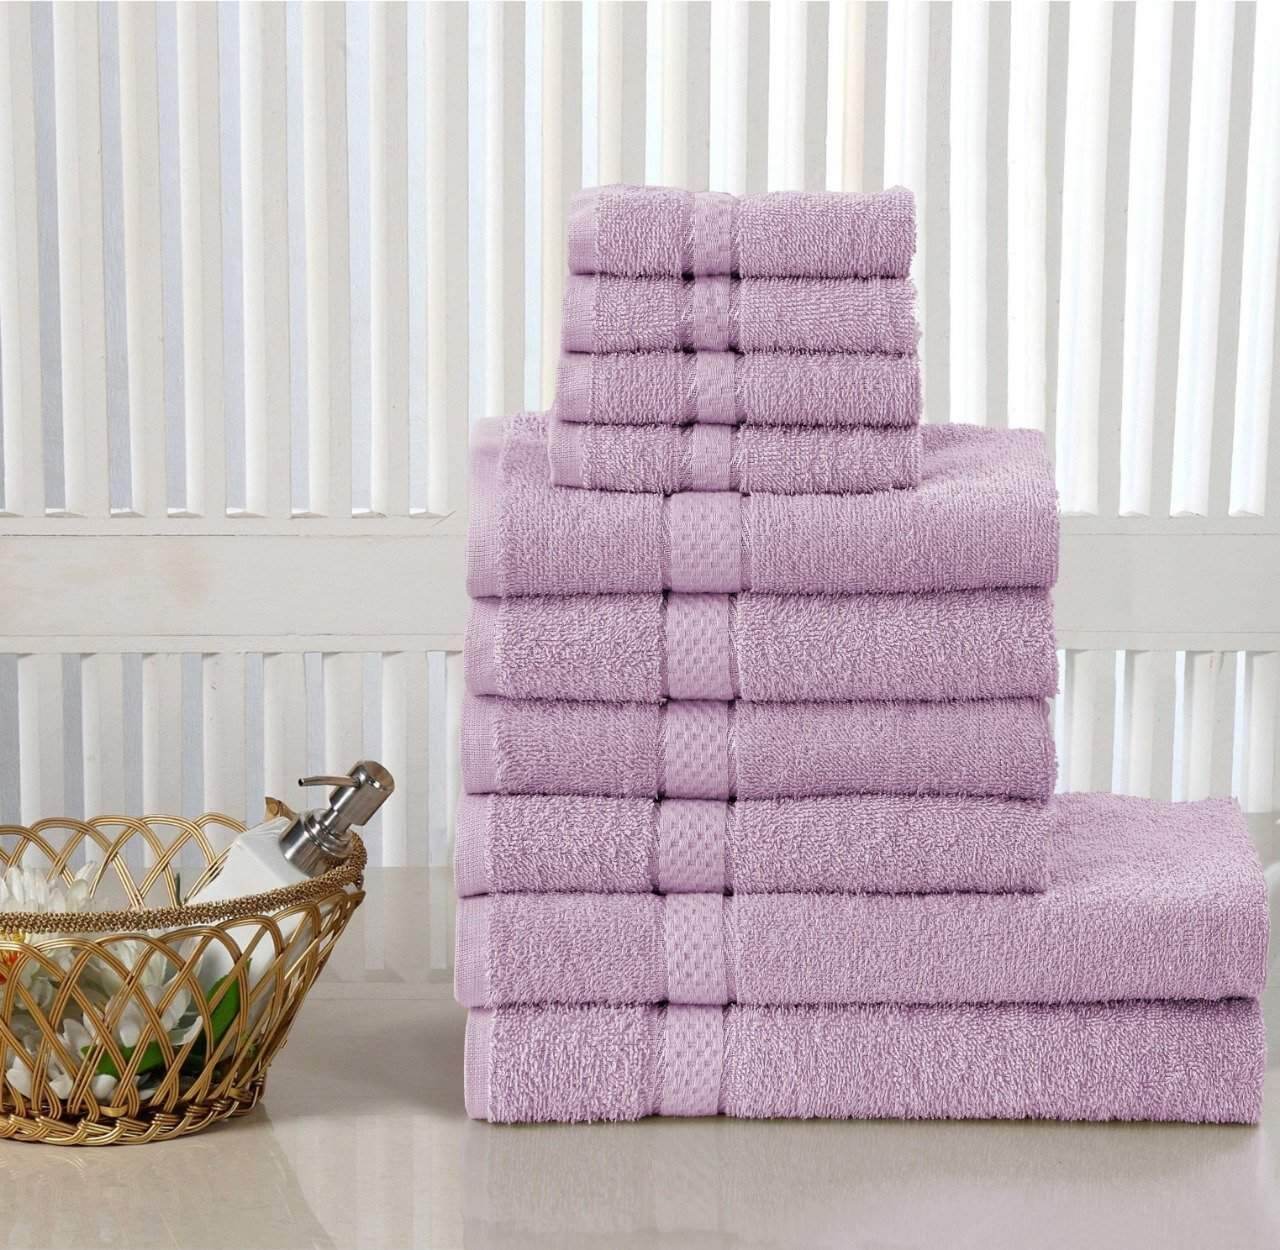 Towel bale